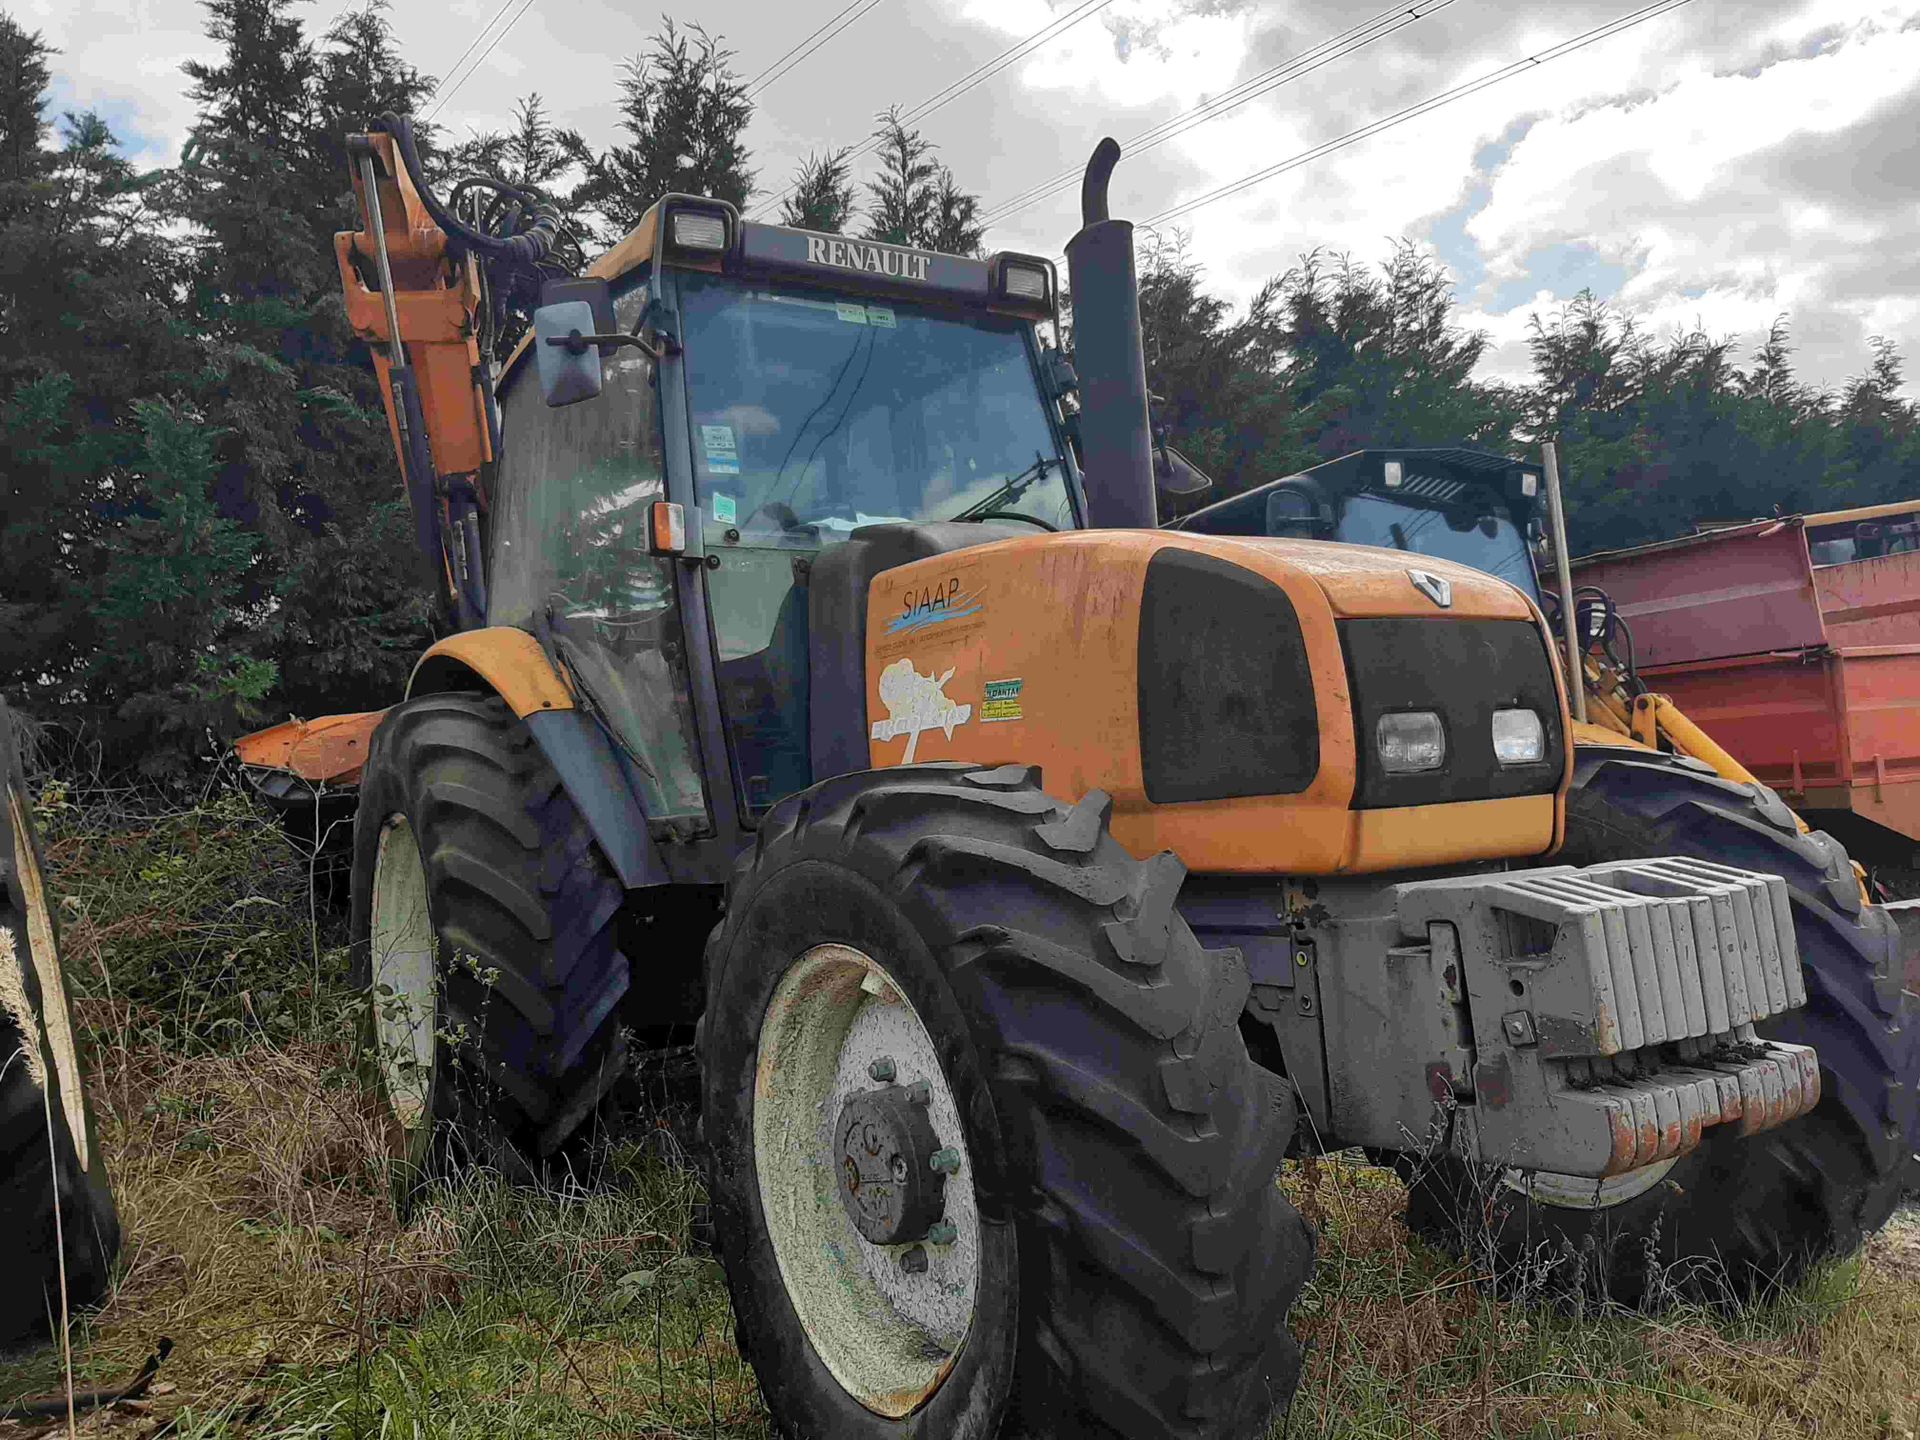 Null RENAULT ERGOS tractor, Diesel, imm. 966 MCZ 75, Type T3582PB, serial number&hellip;